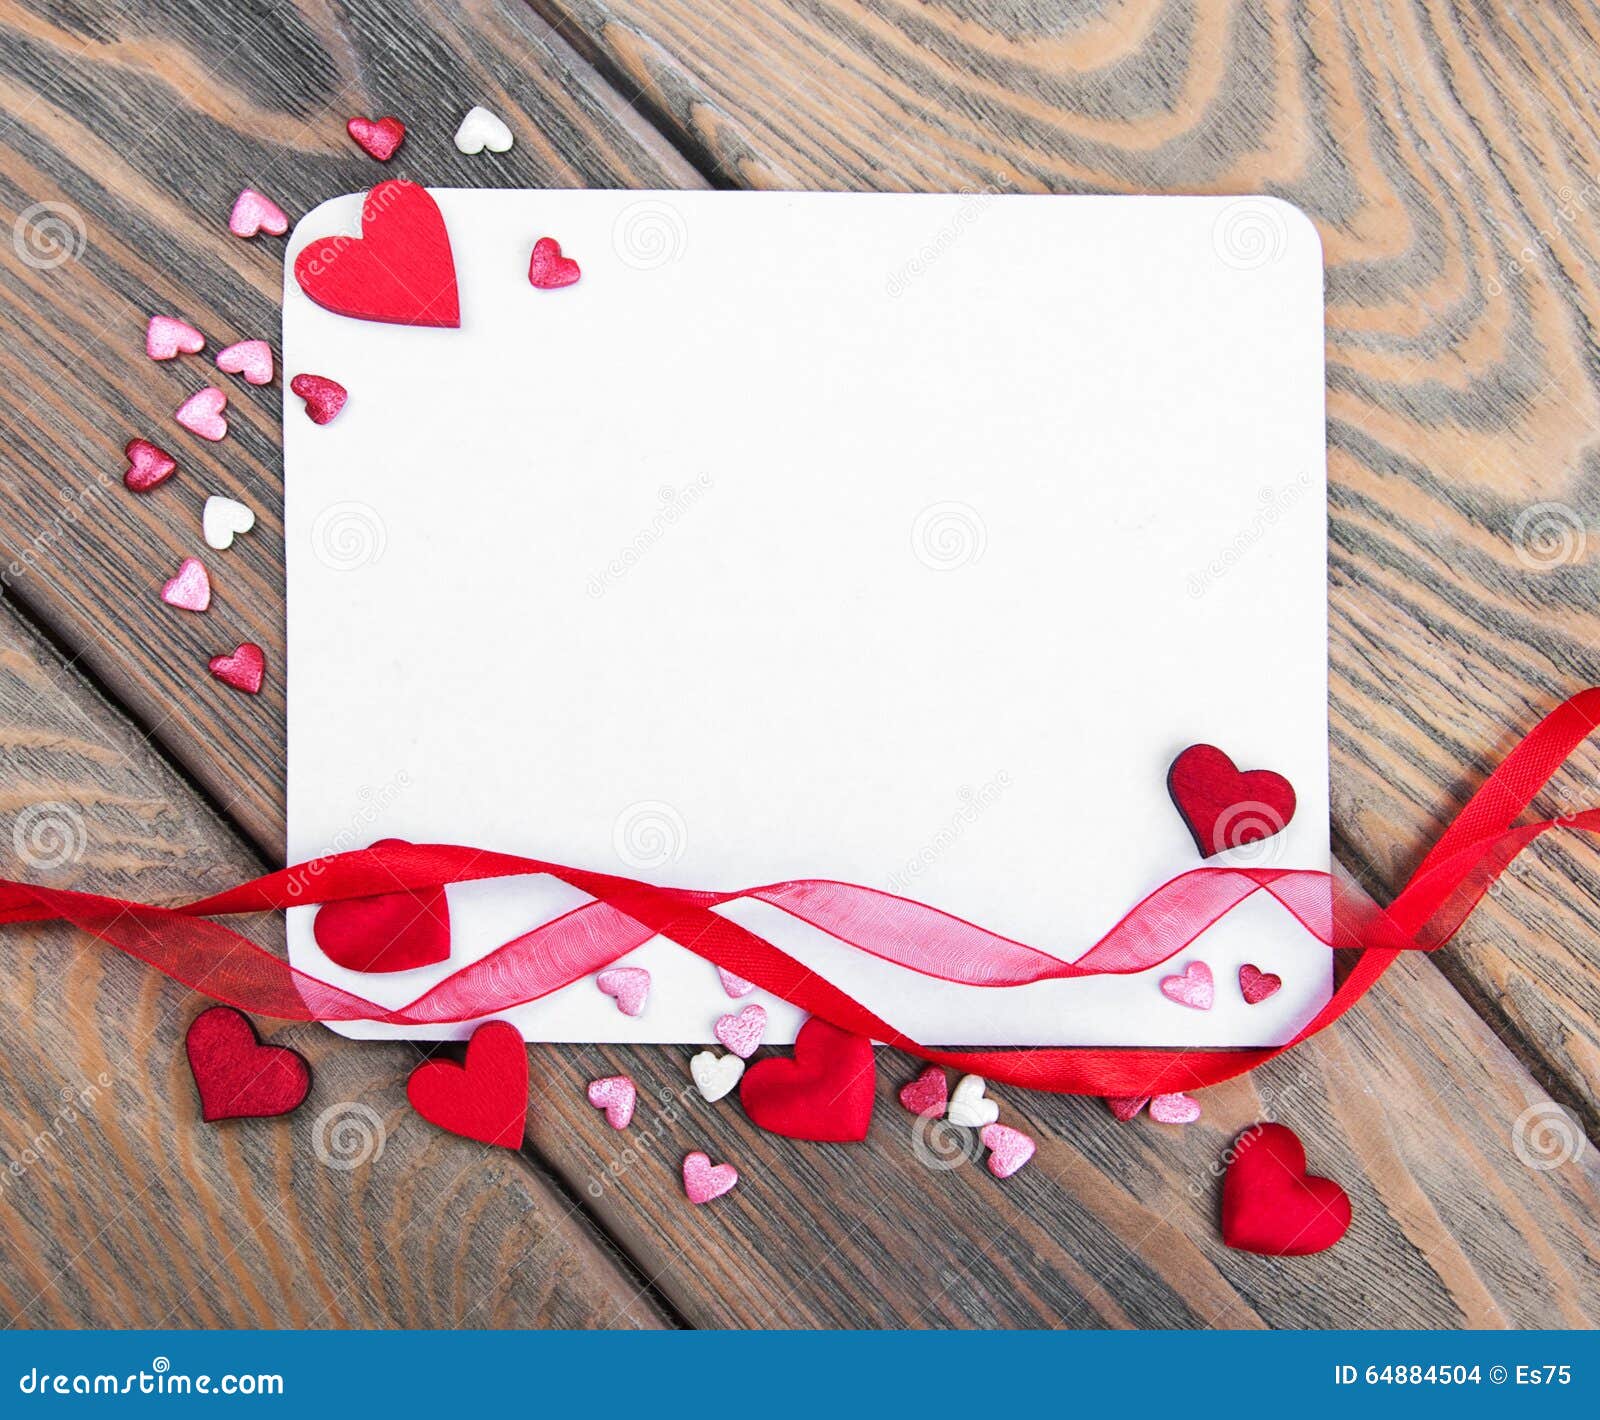 Blank valentines card stock photo. Image of romantic - 64884504